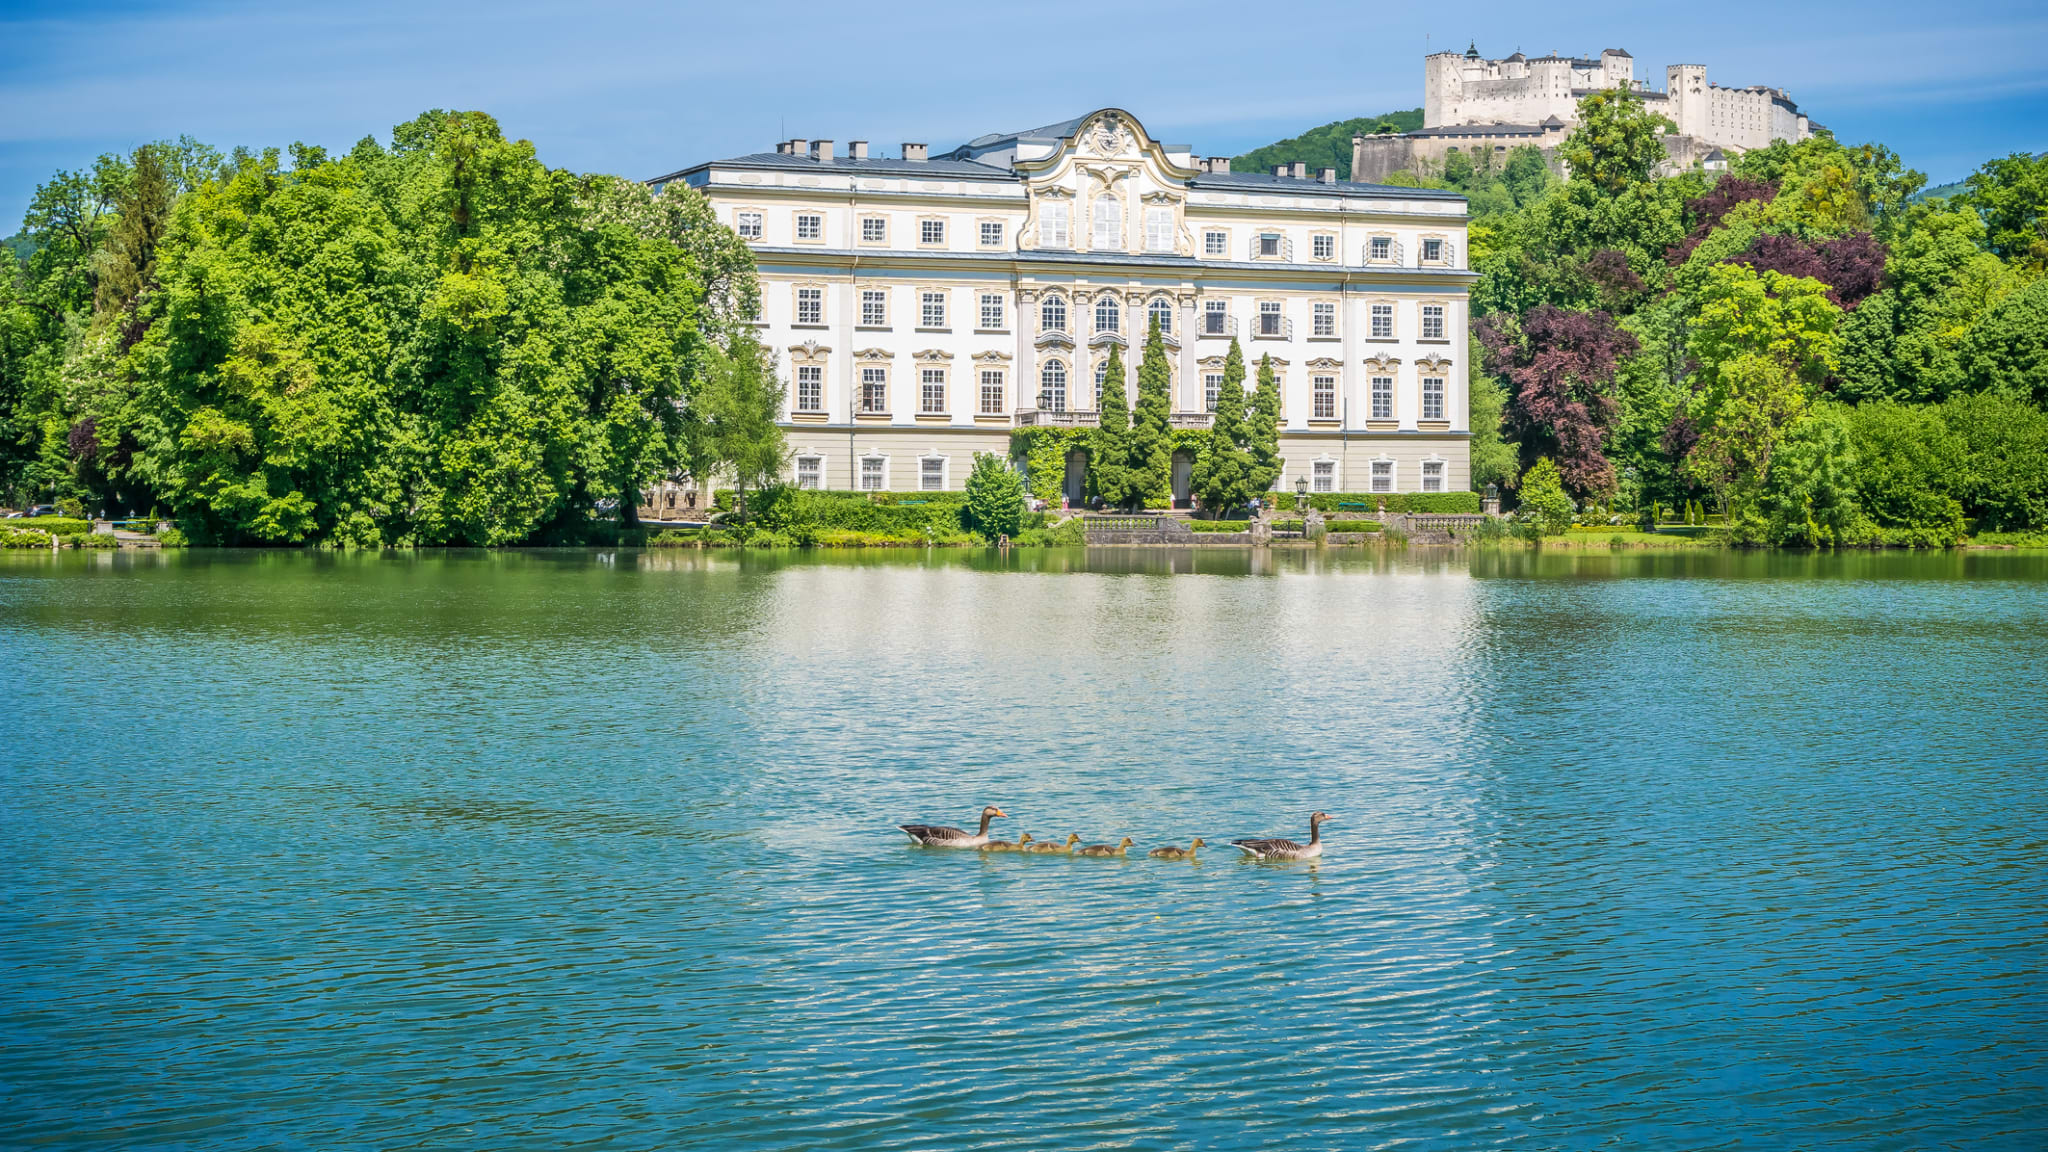 Schloss Leopoldskron, Salzburg, Österreich ©bluejayphoto/iStock / Getty Images Plus via Getty Images